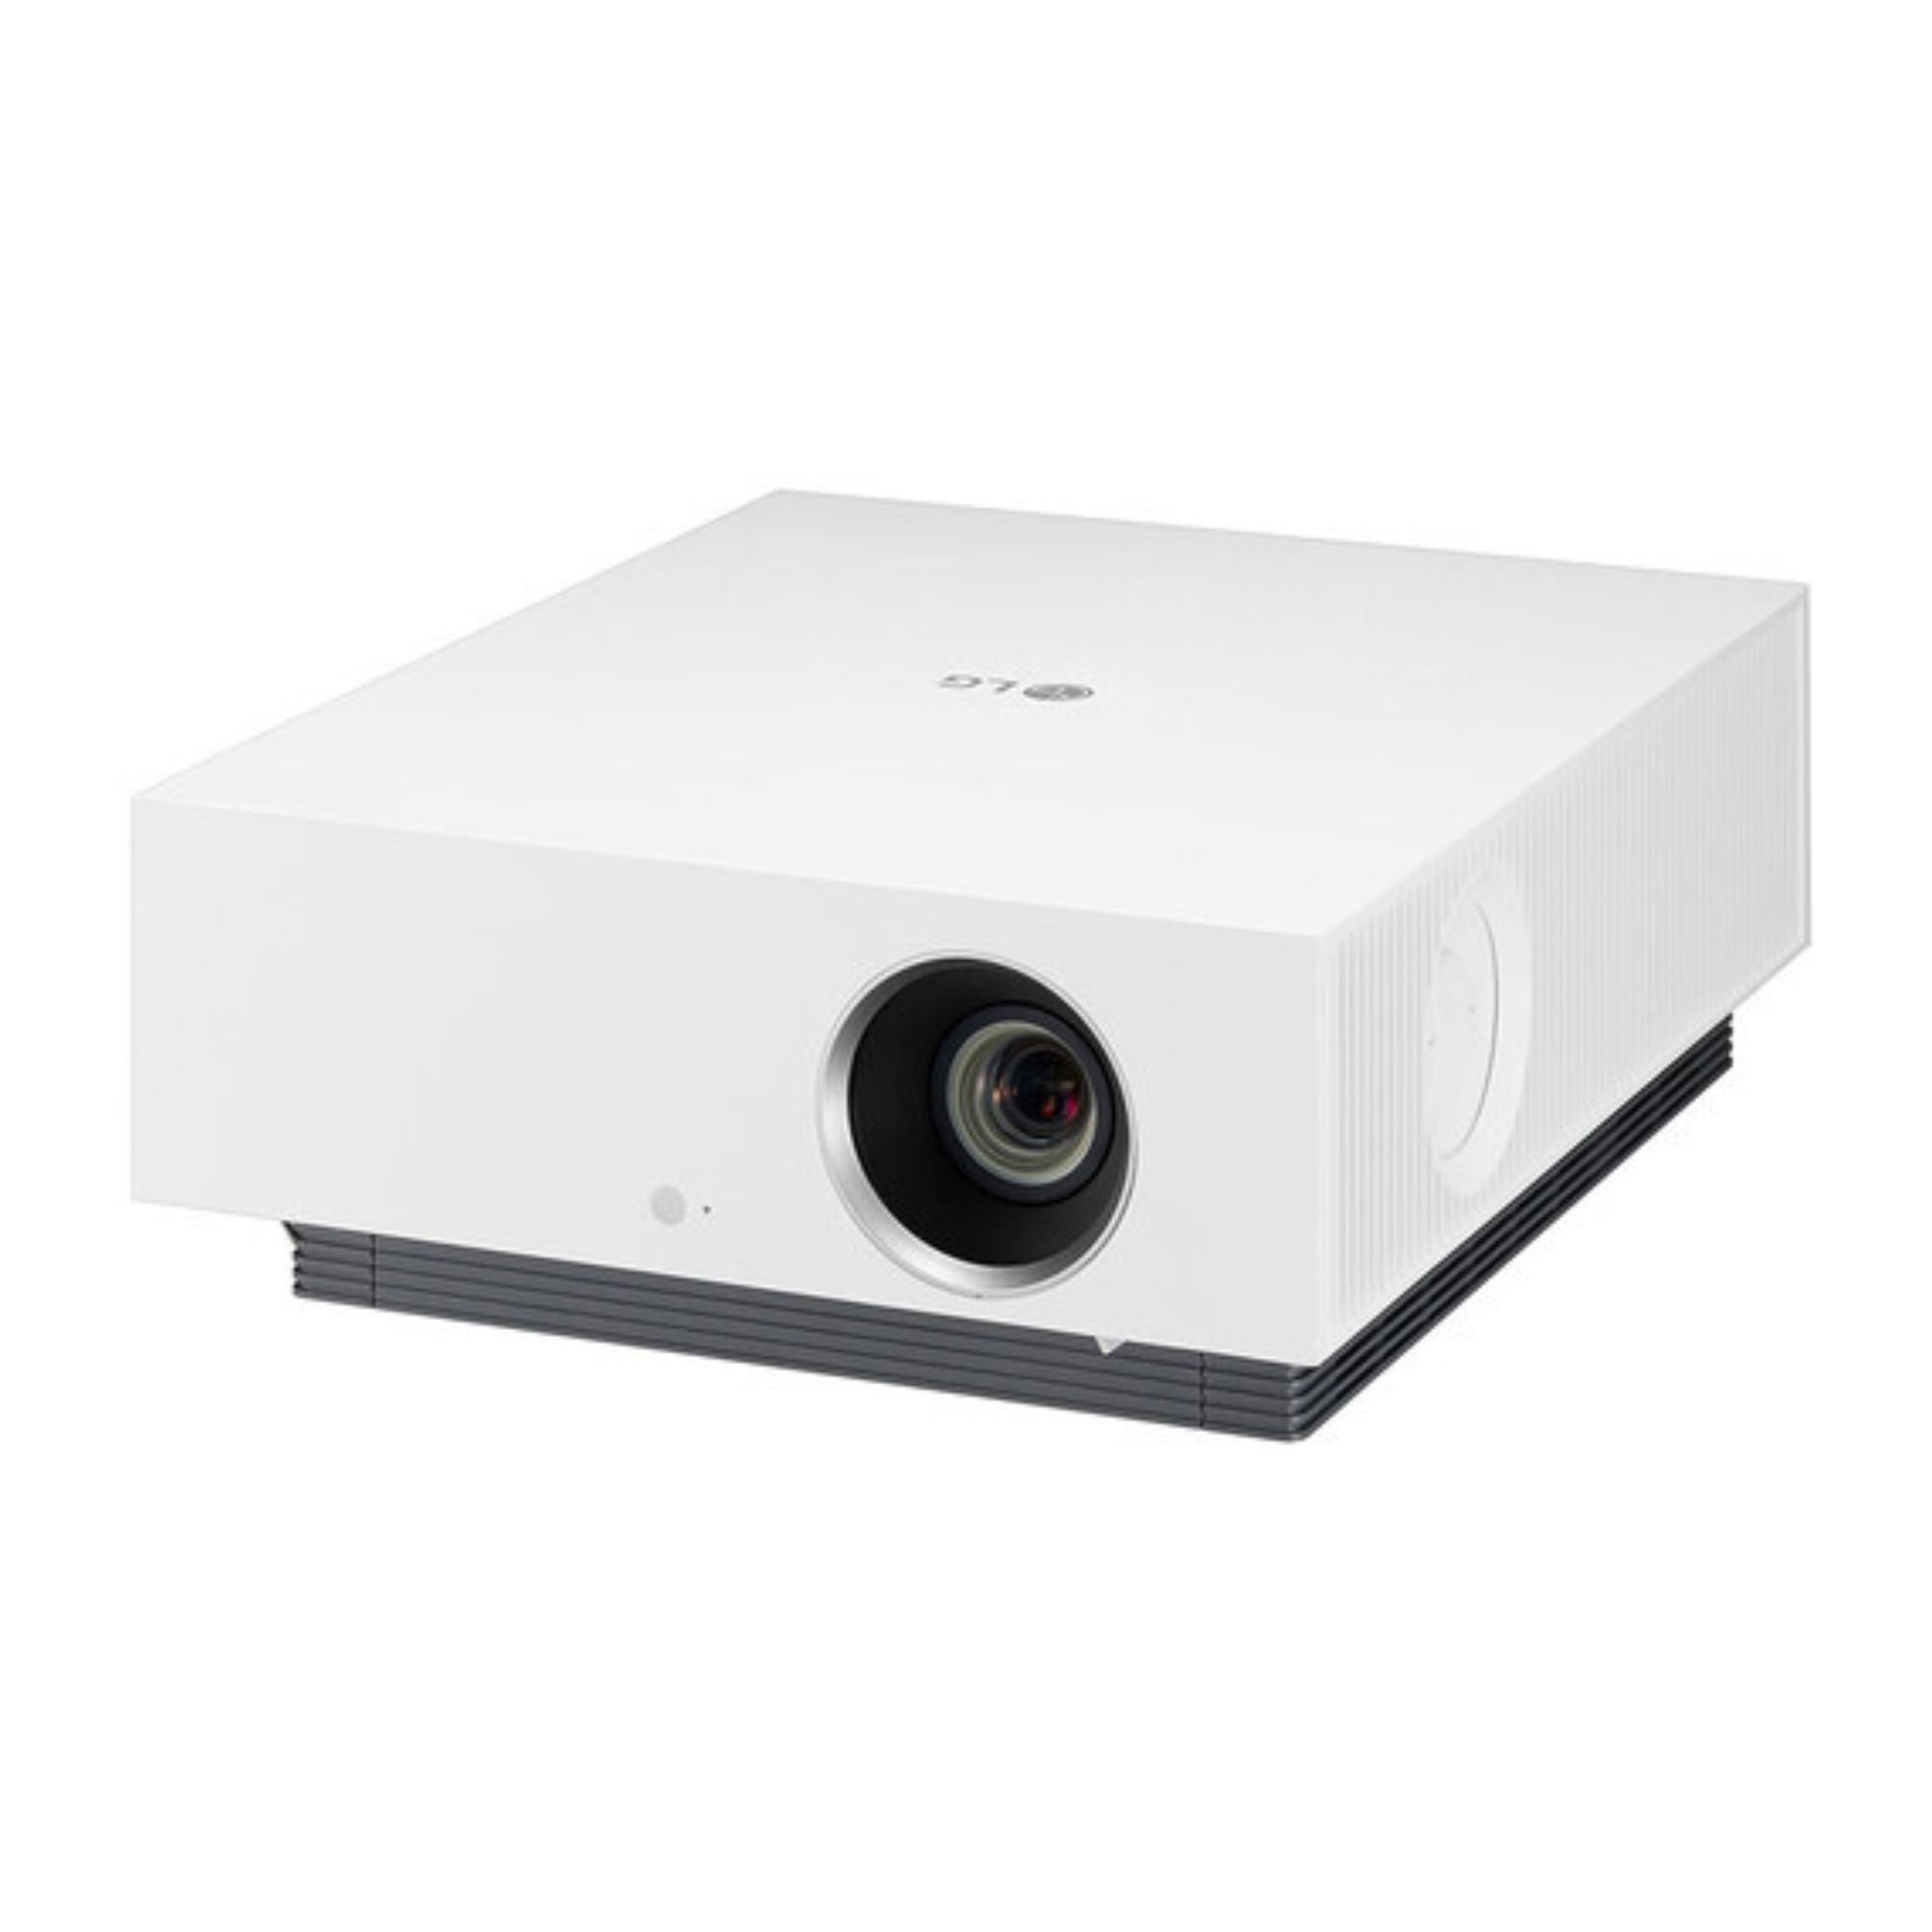 LG Projectors HU810PW - 4K UHD Laser Smart Home Theatre Projector - AVStore